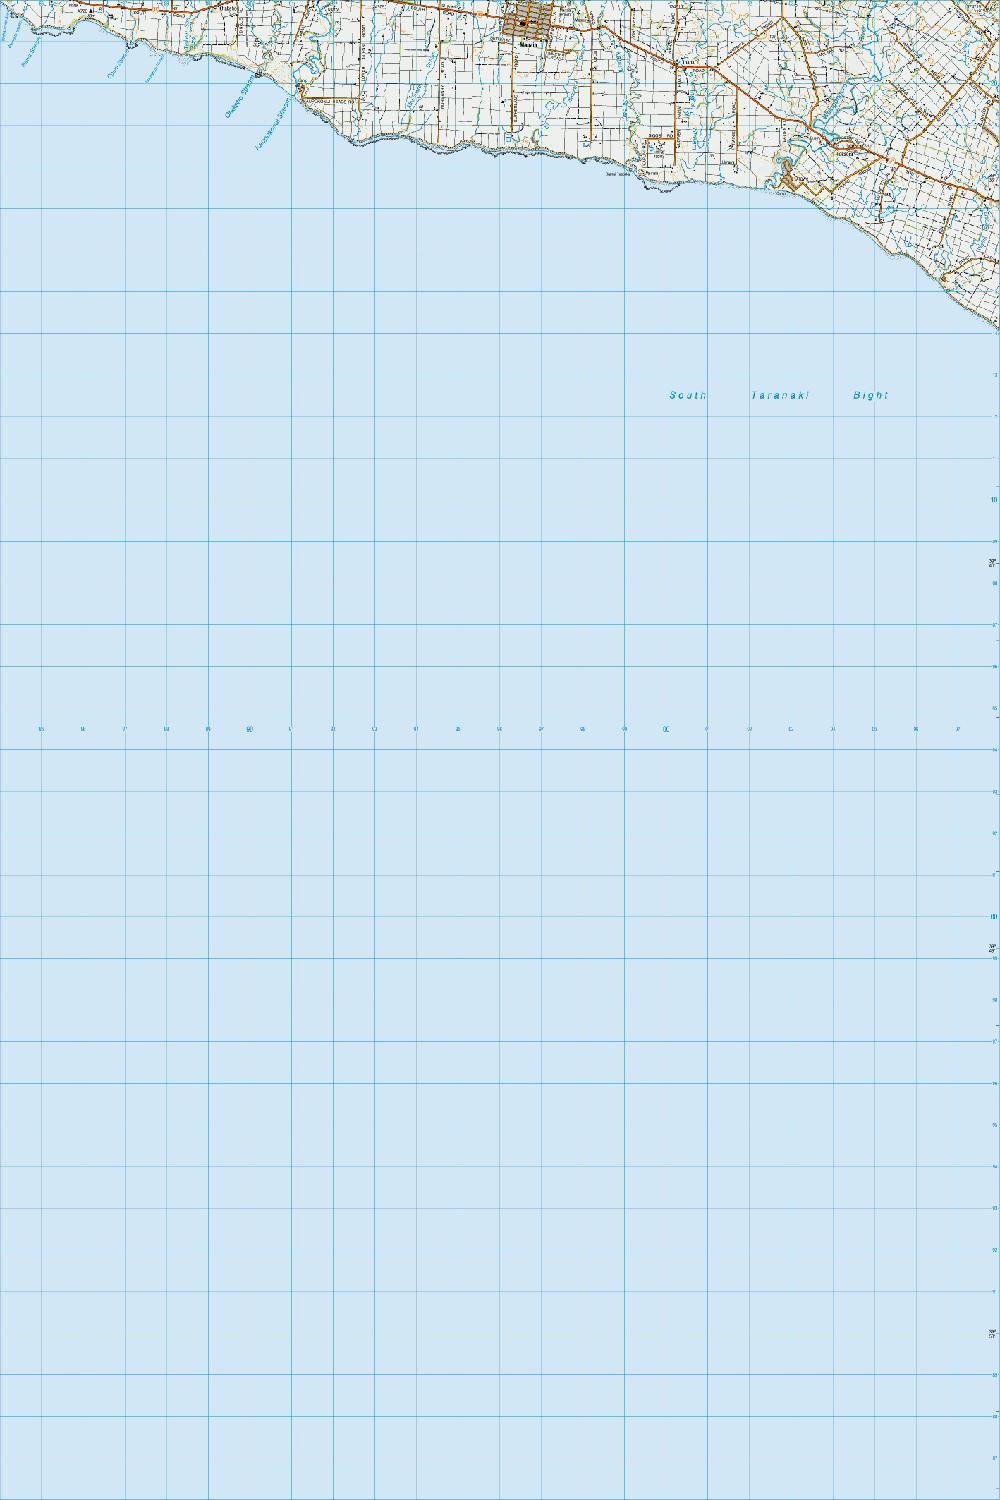 Topo map of Manaia